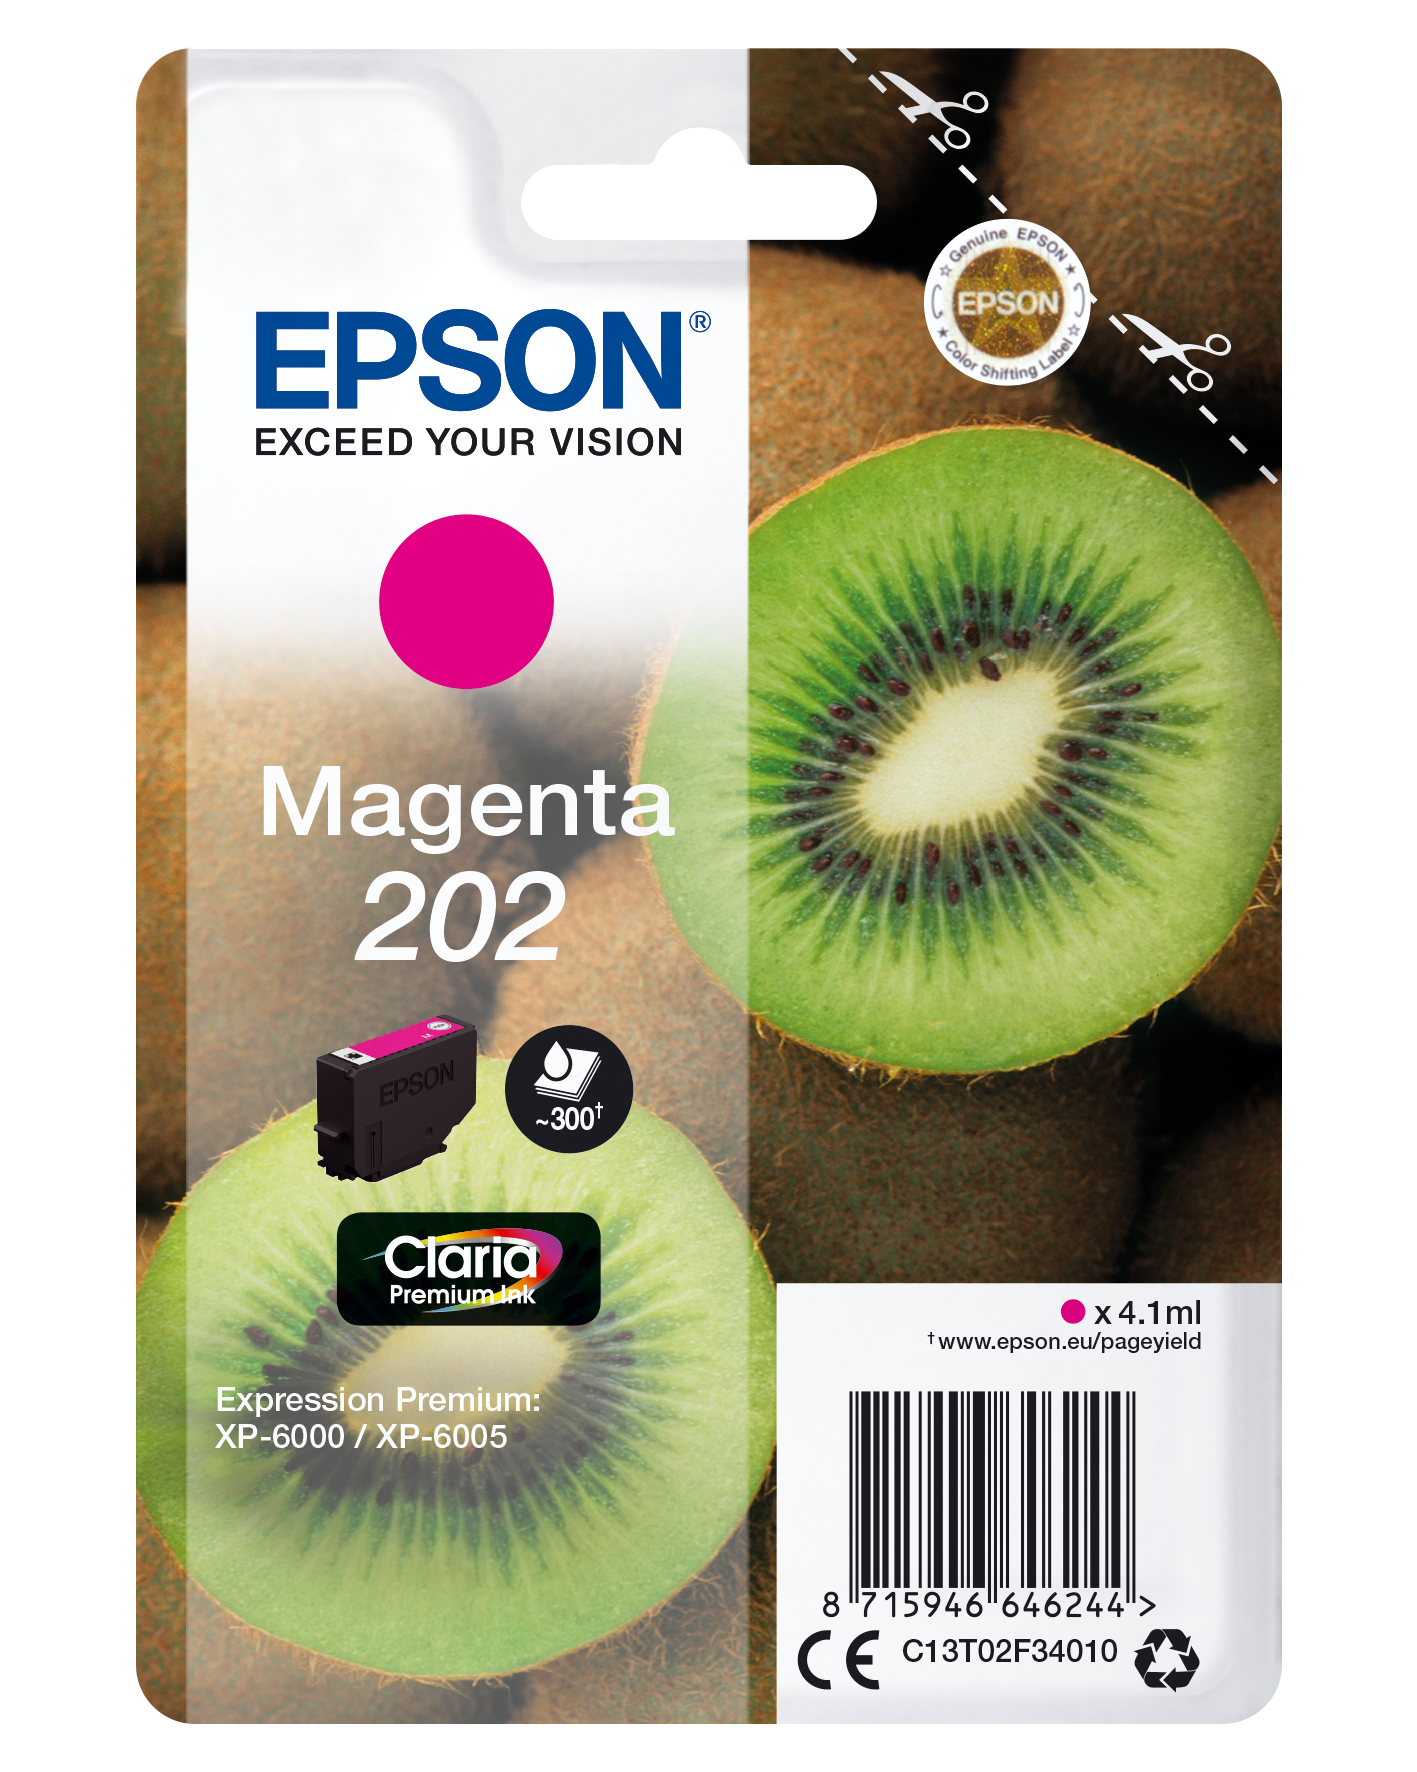 Epson Kiwi Singlepack Magenta 202 Claria Premium Ink single pack / magenta